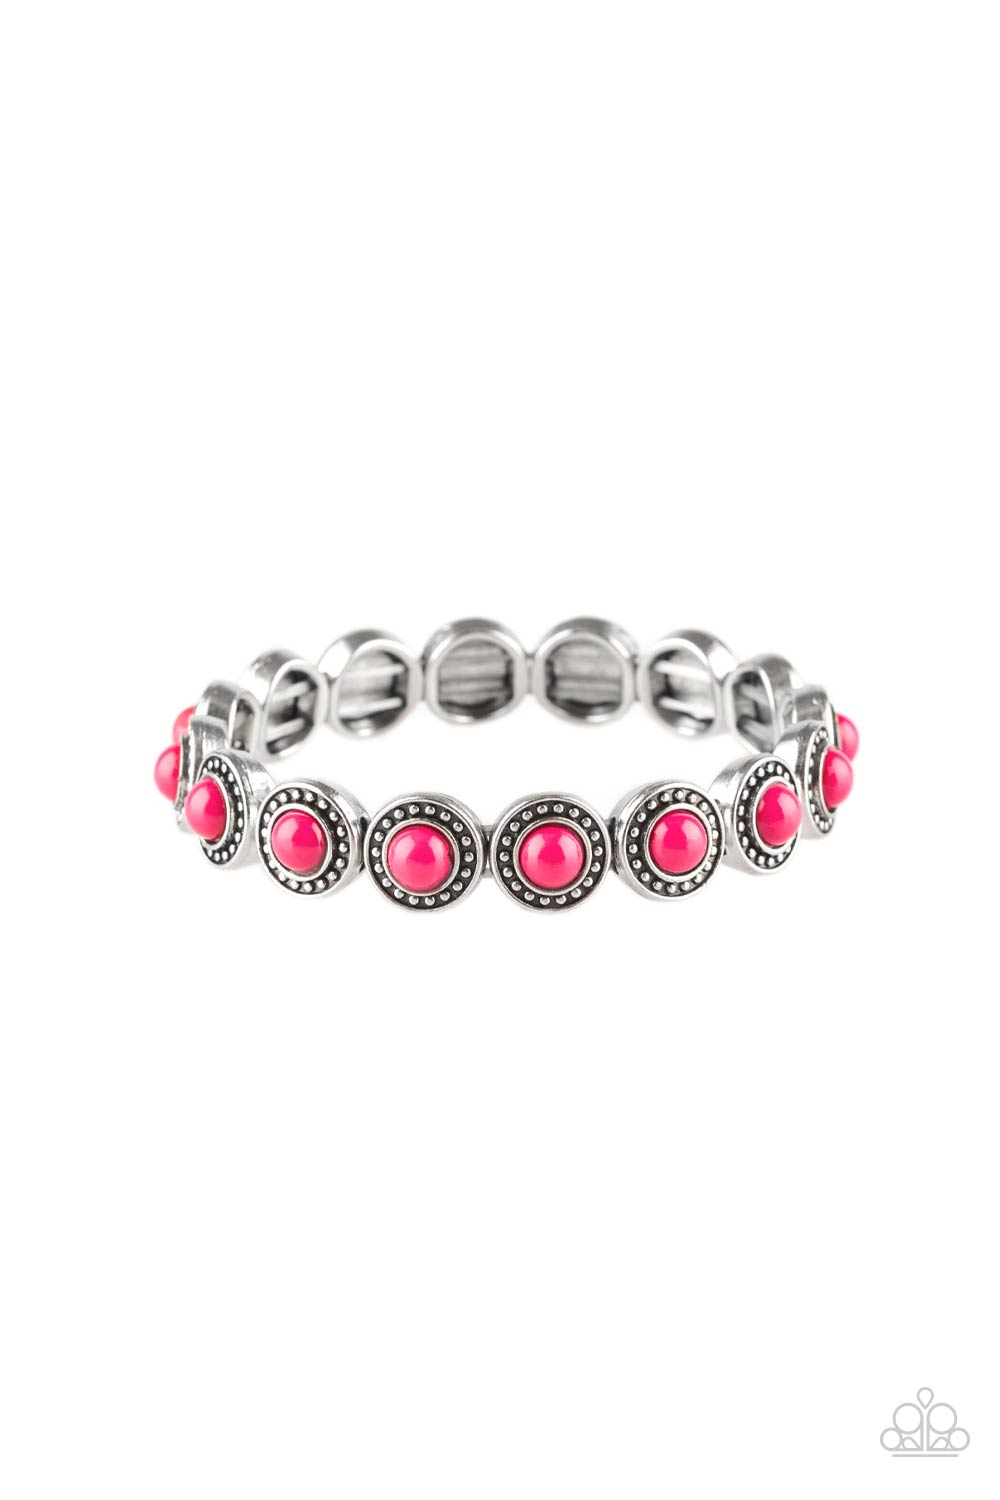 Globetrotter Goals - Pink Bracelet - Paparazzi Accessories